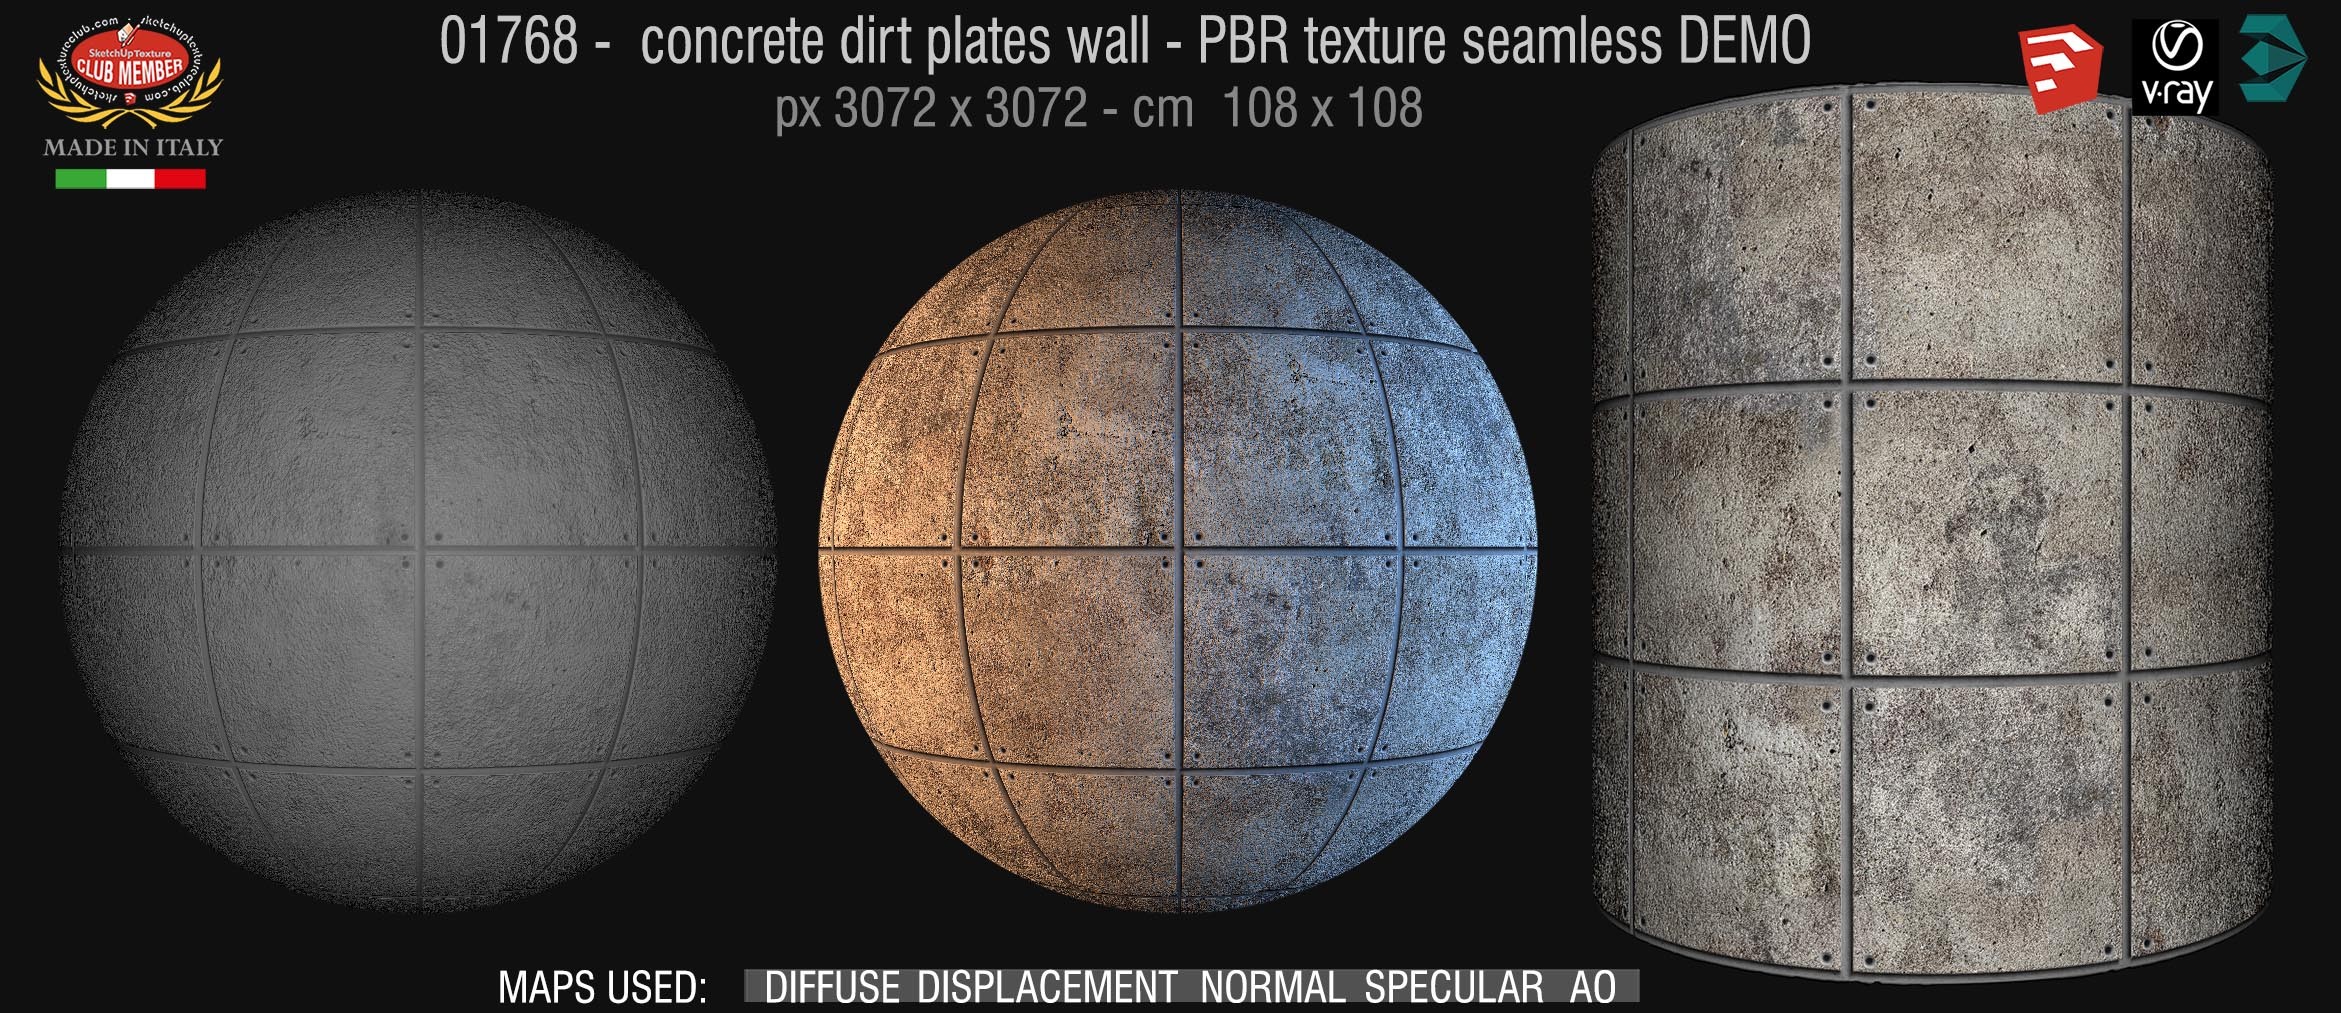 01768  concrete dirt plates wall PBR texture seamless DEMO